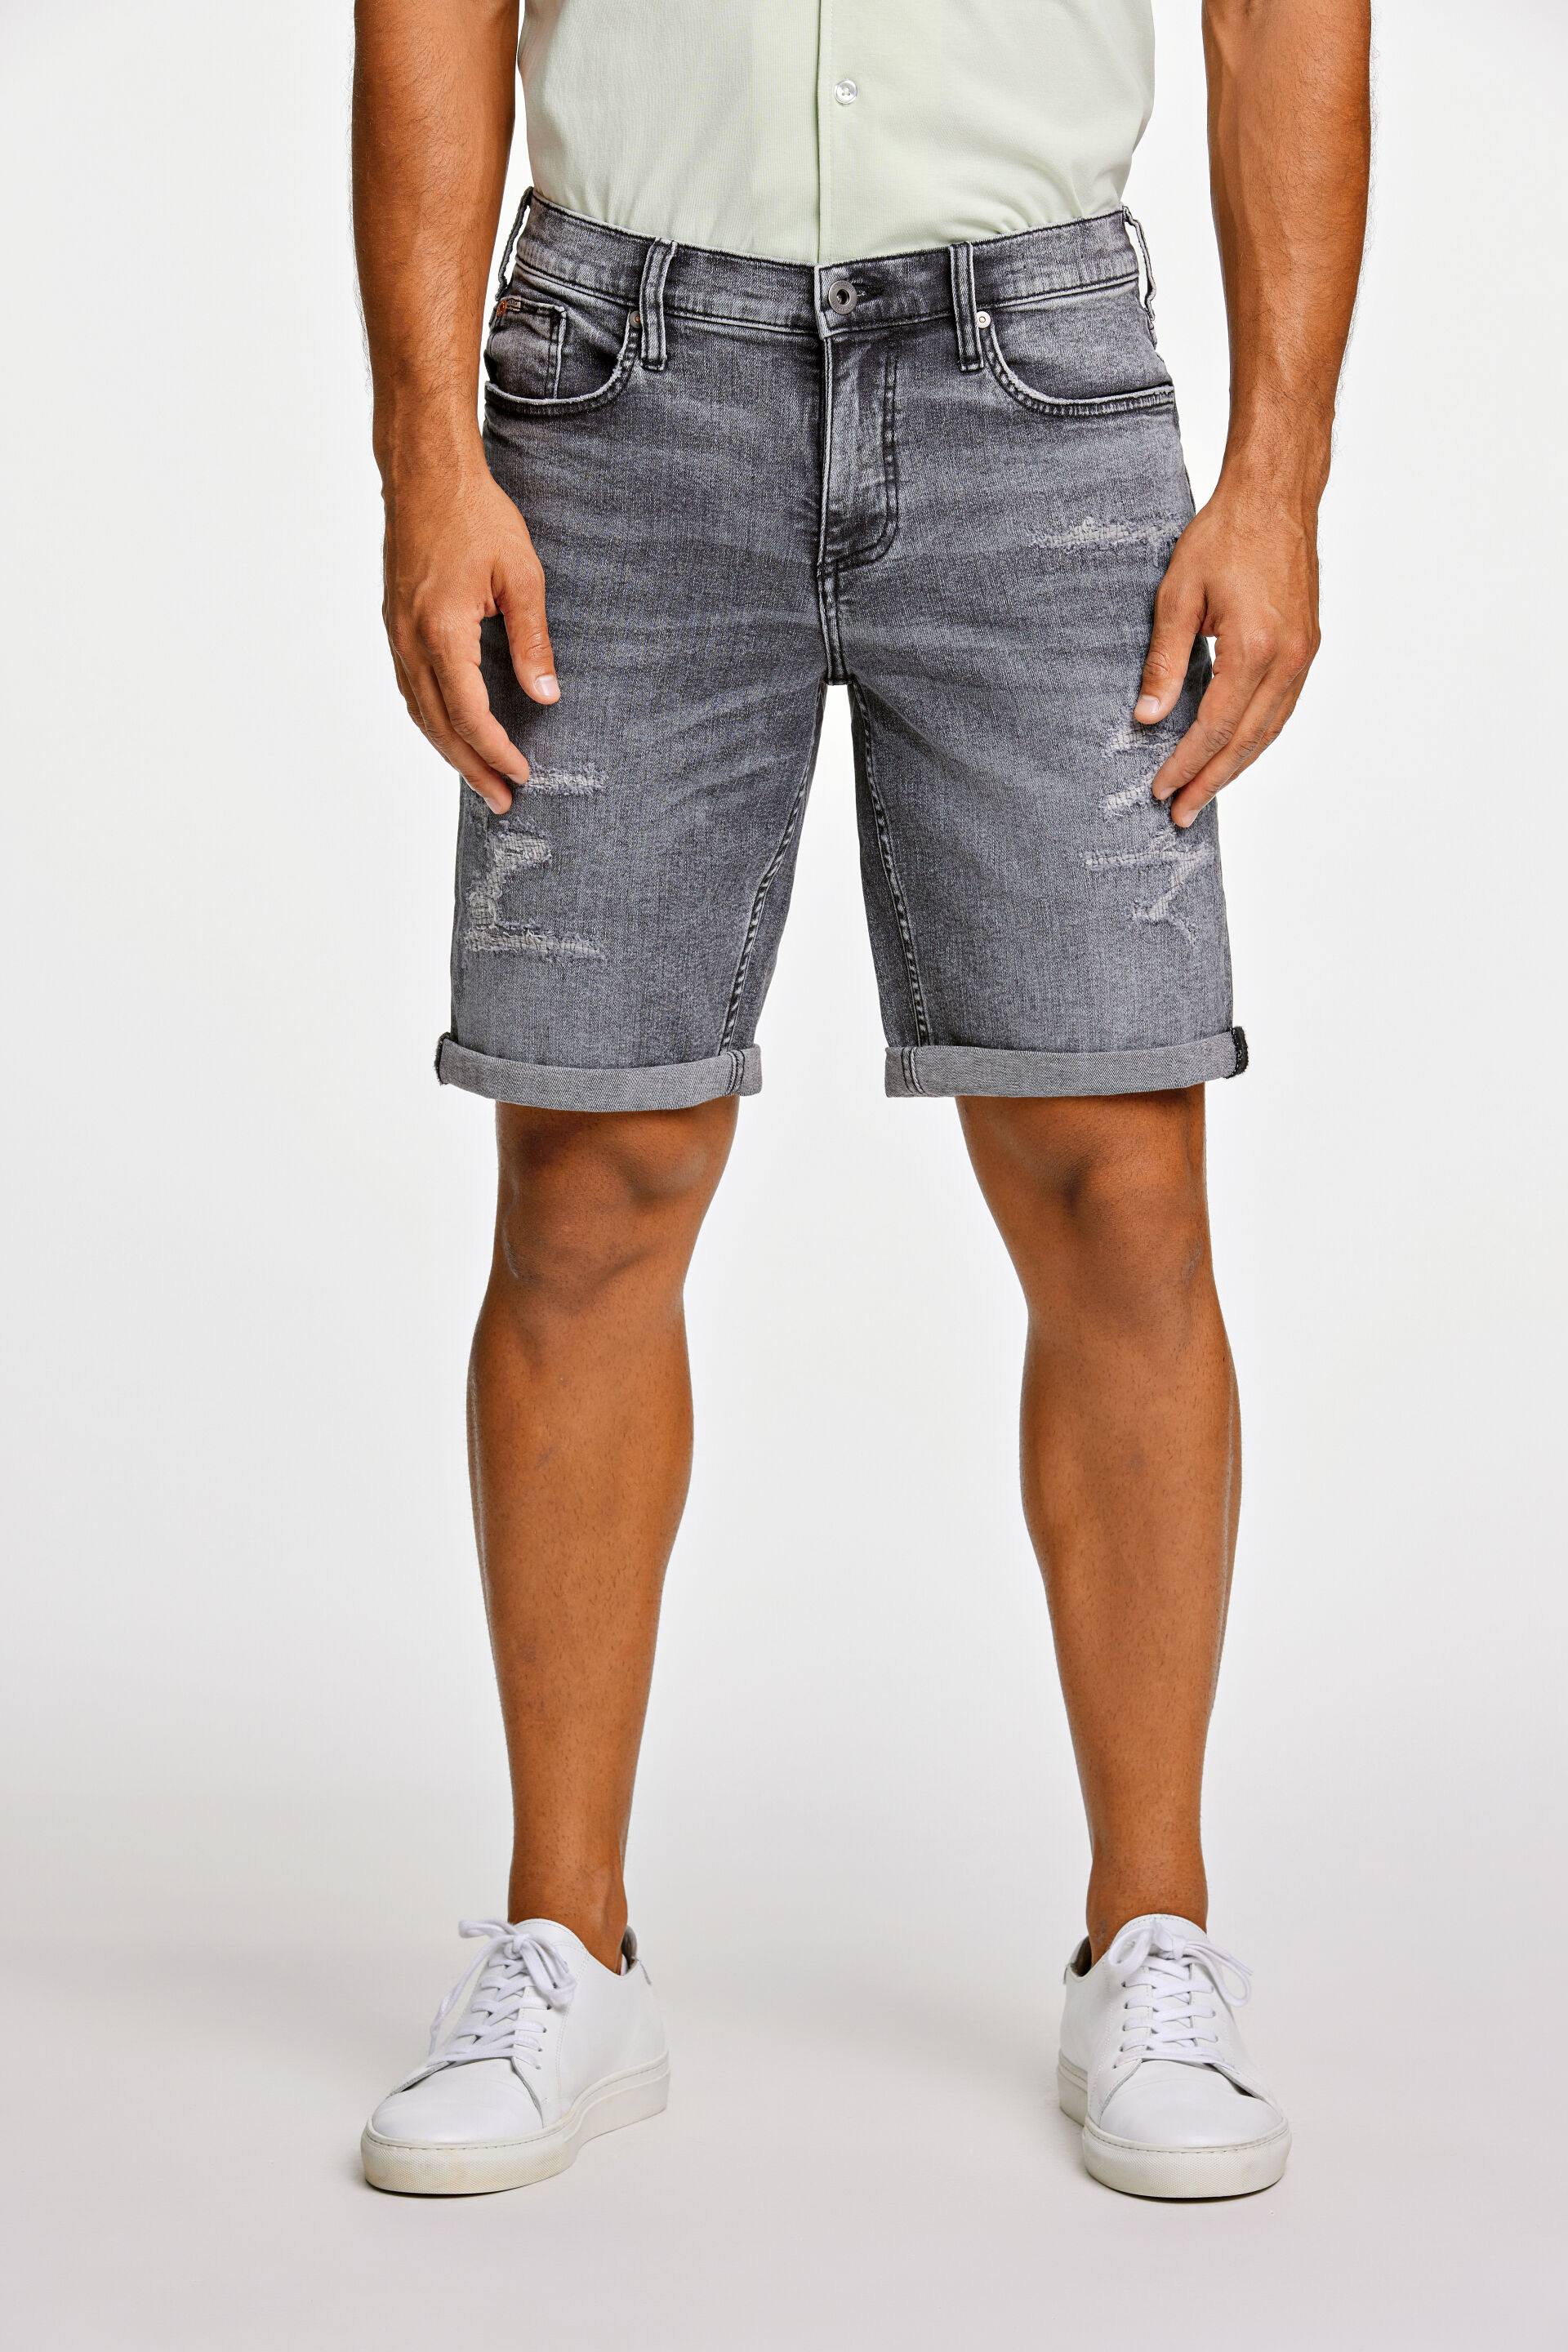 Jeans-Shorts Jeans-Shorts Grau 30-550002TSG